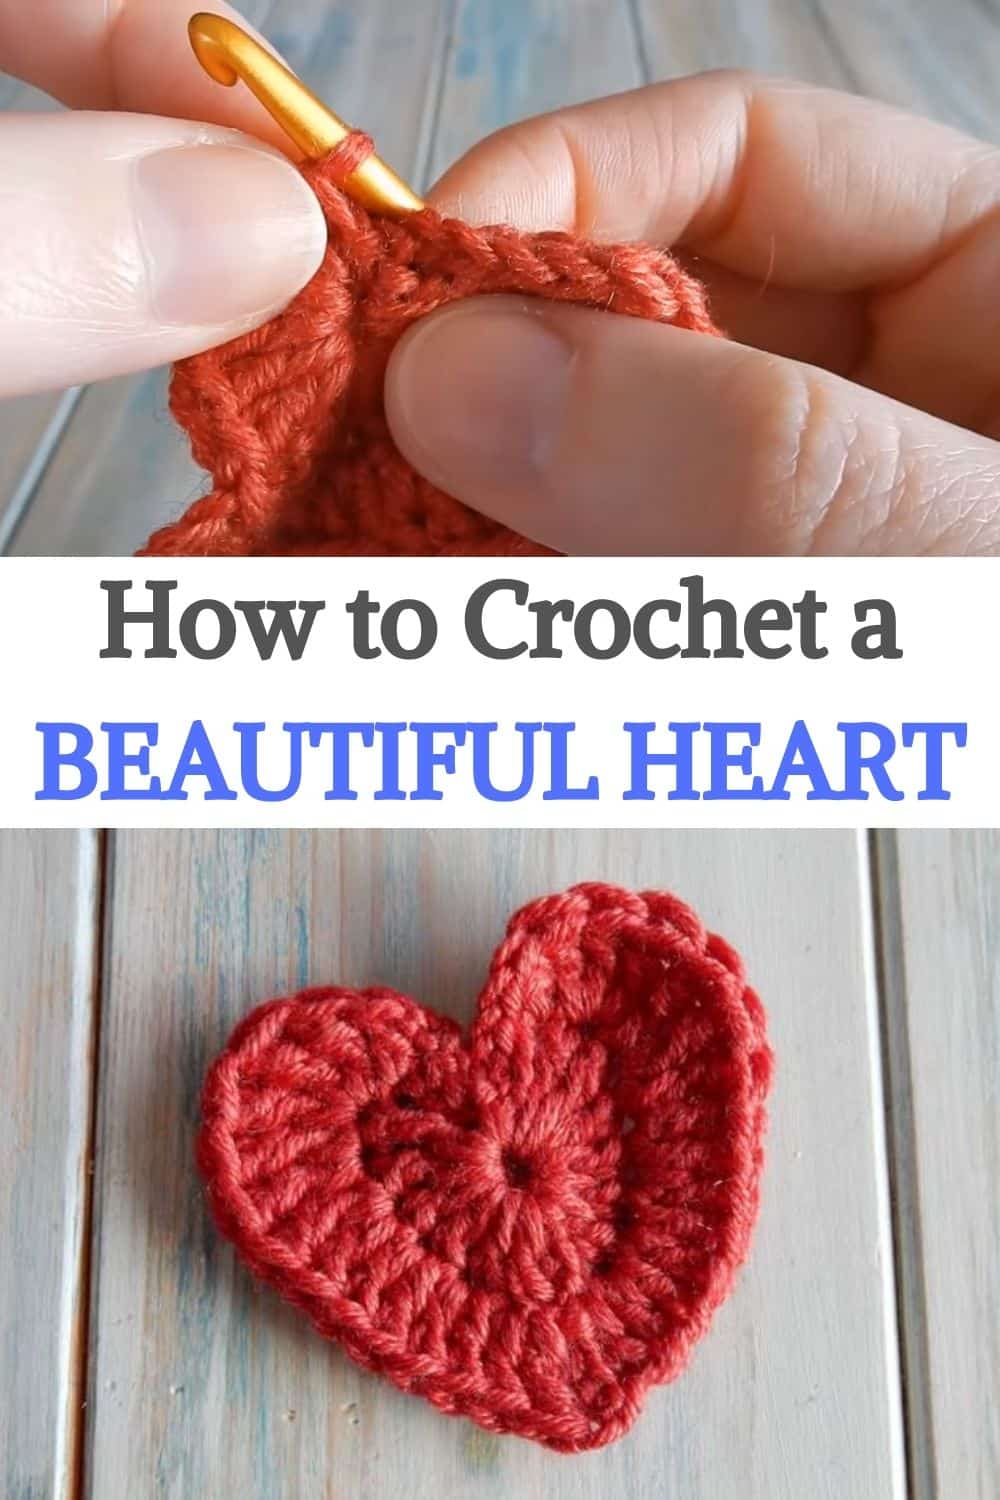 Crochet a Beautiful Heart